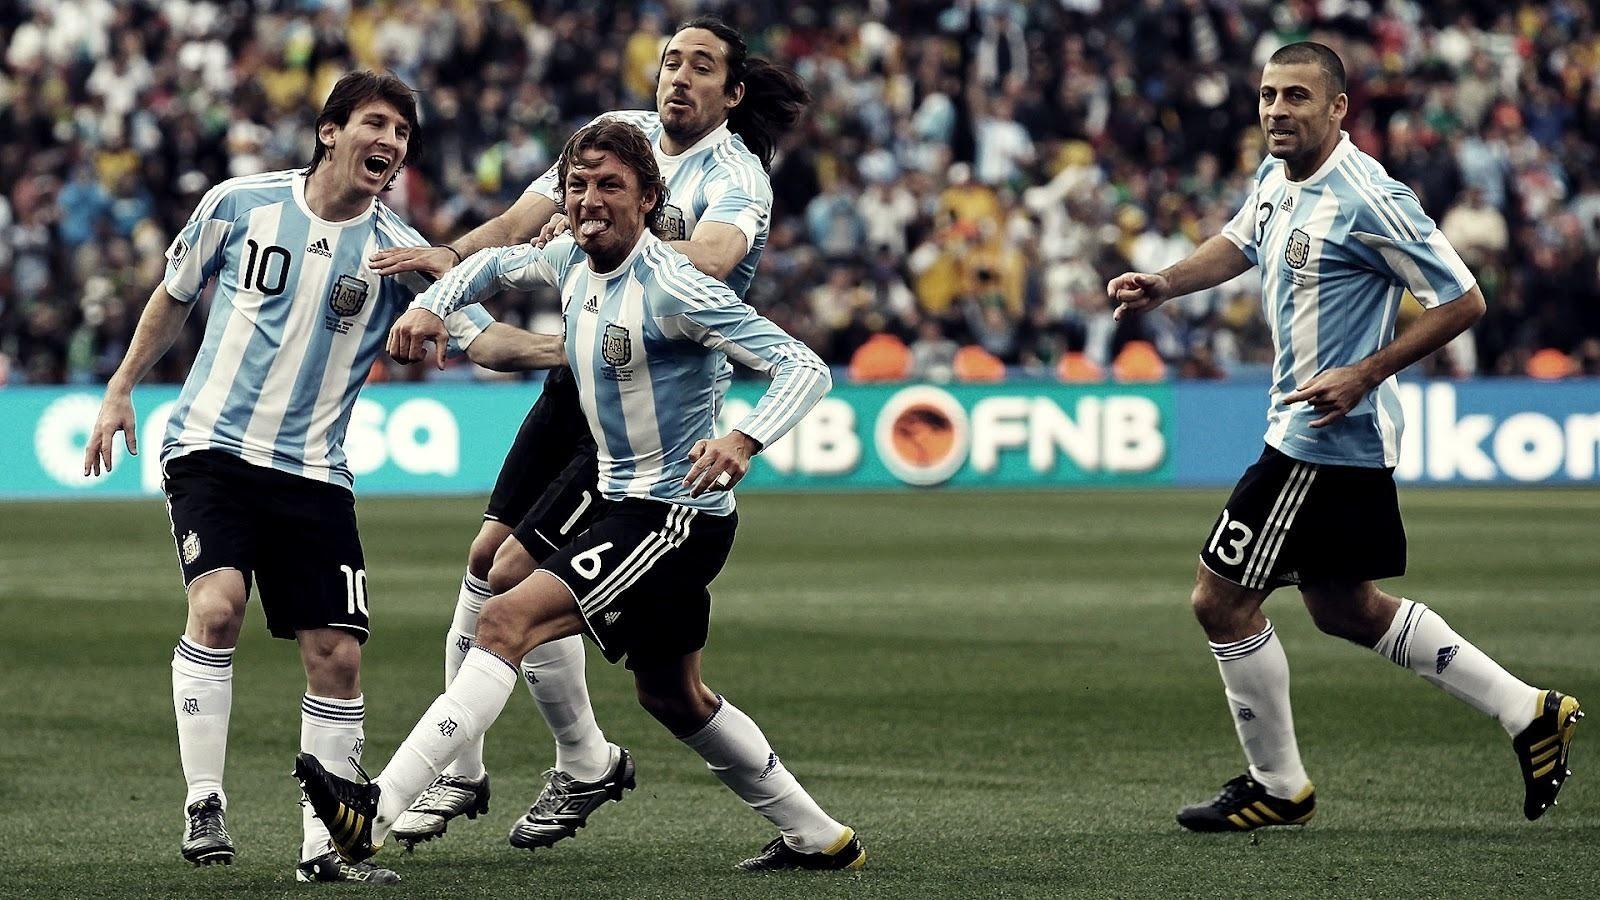 Argentina National Football Team Hi Rise Image. Beautiful image